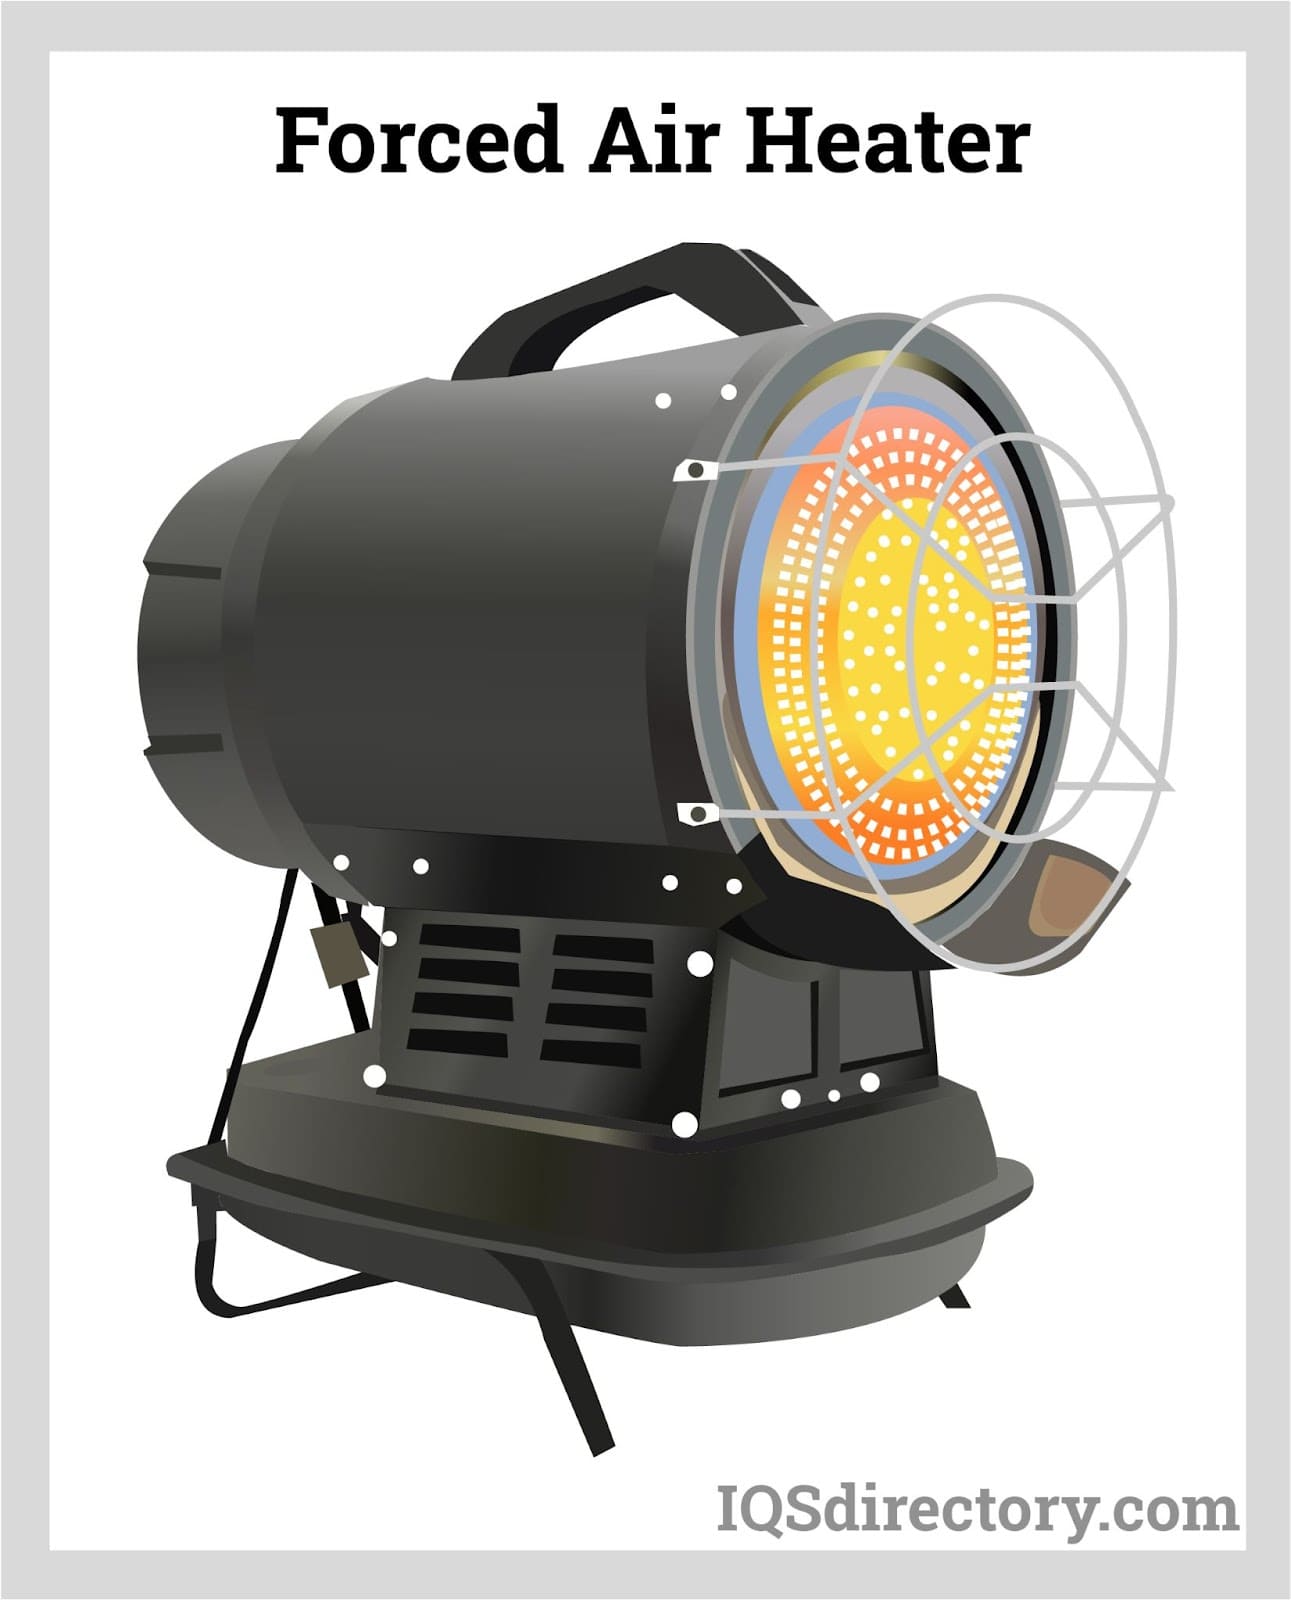 Forced Air Heater